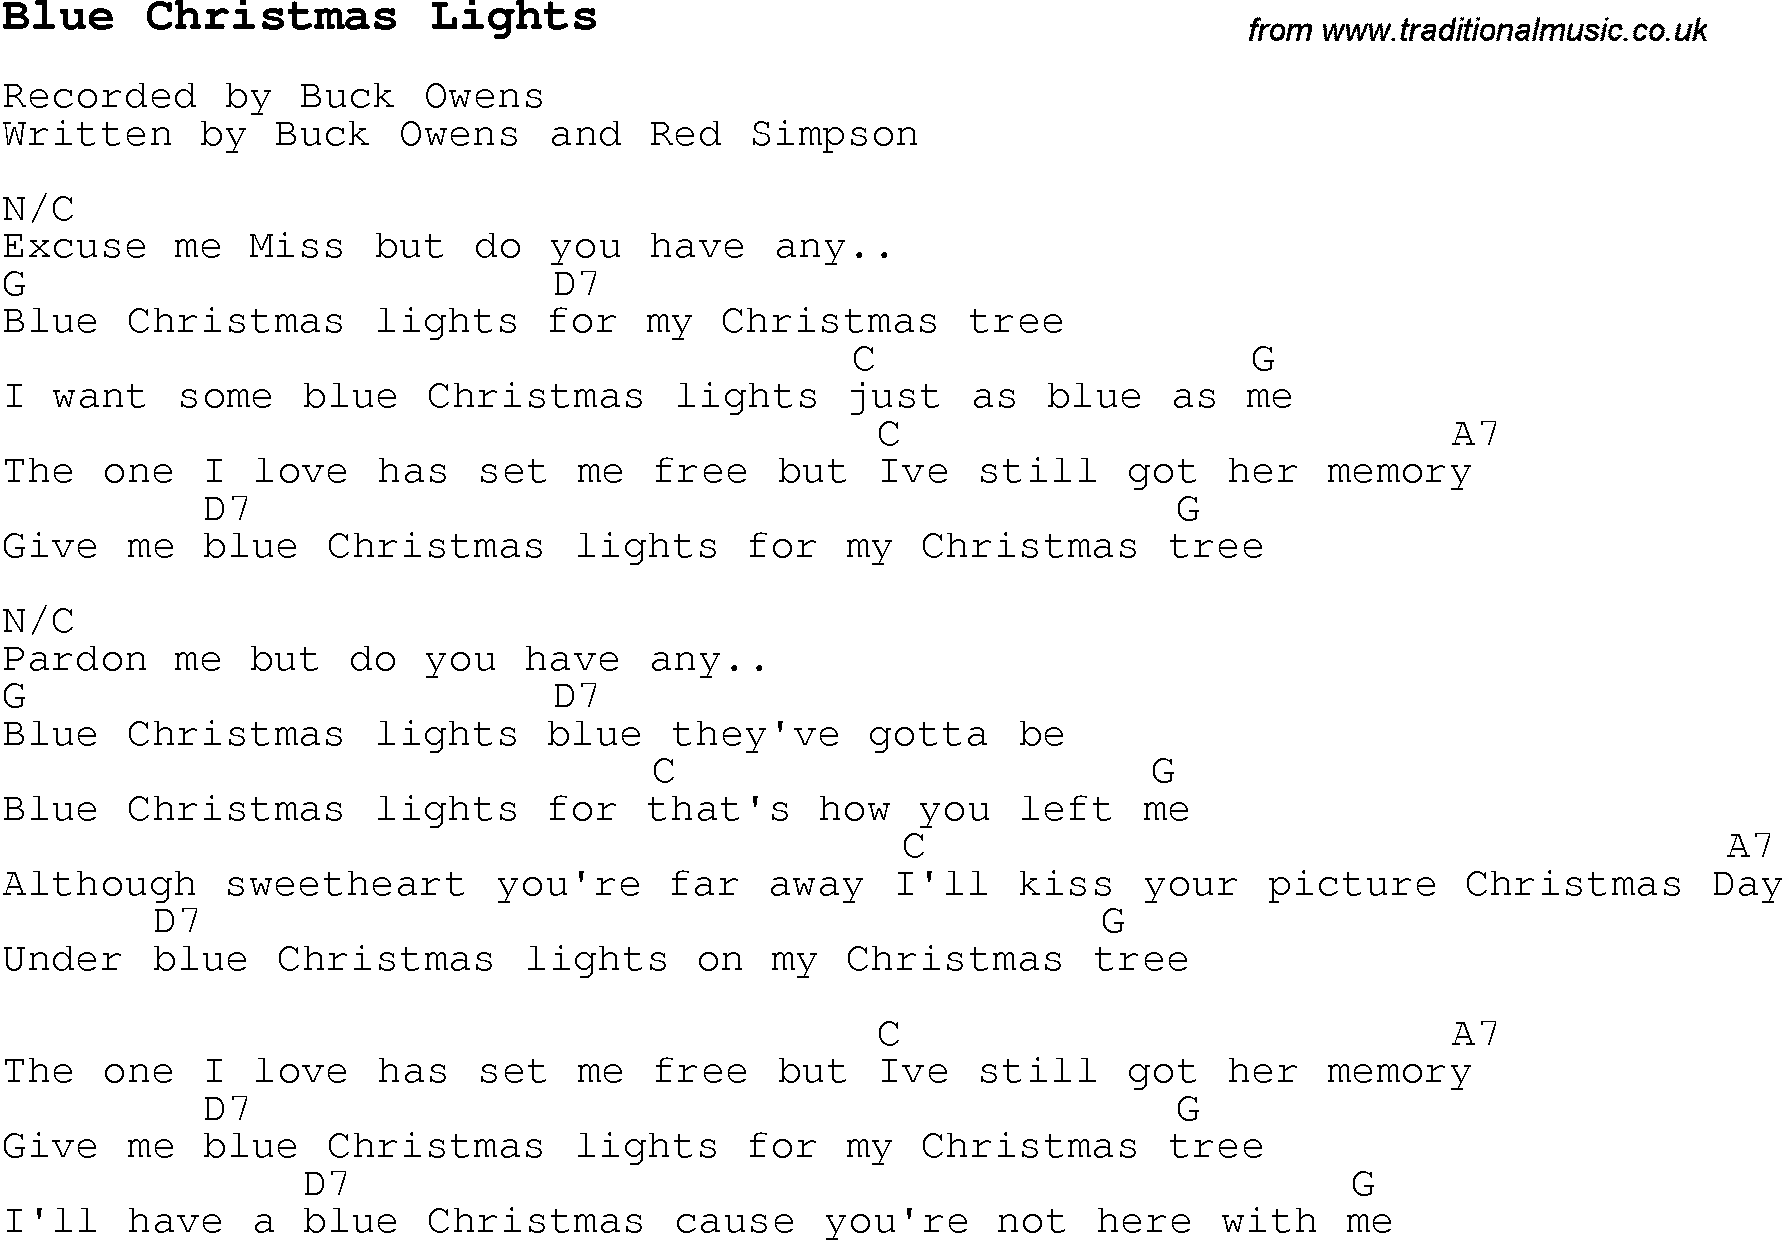 Christmas Songs and Carols, lyrics with chords for guitar banjo for Blue Christmas Lights